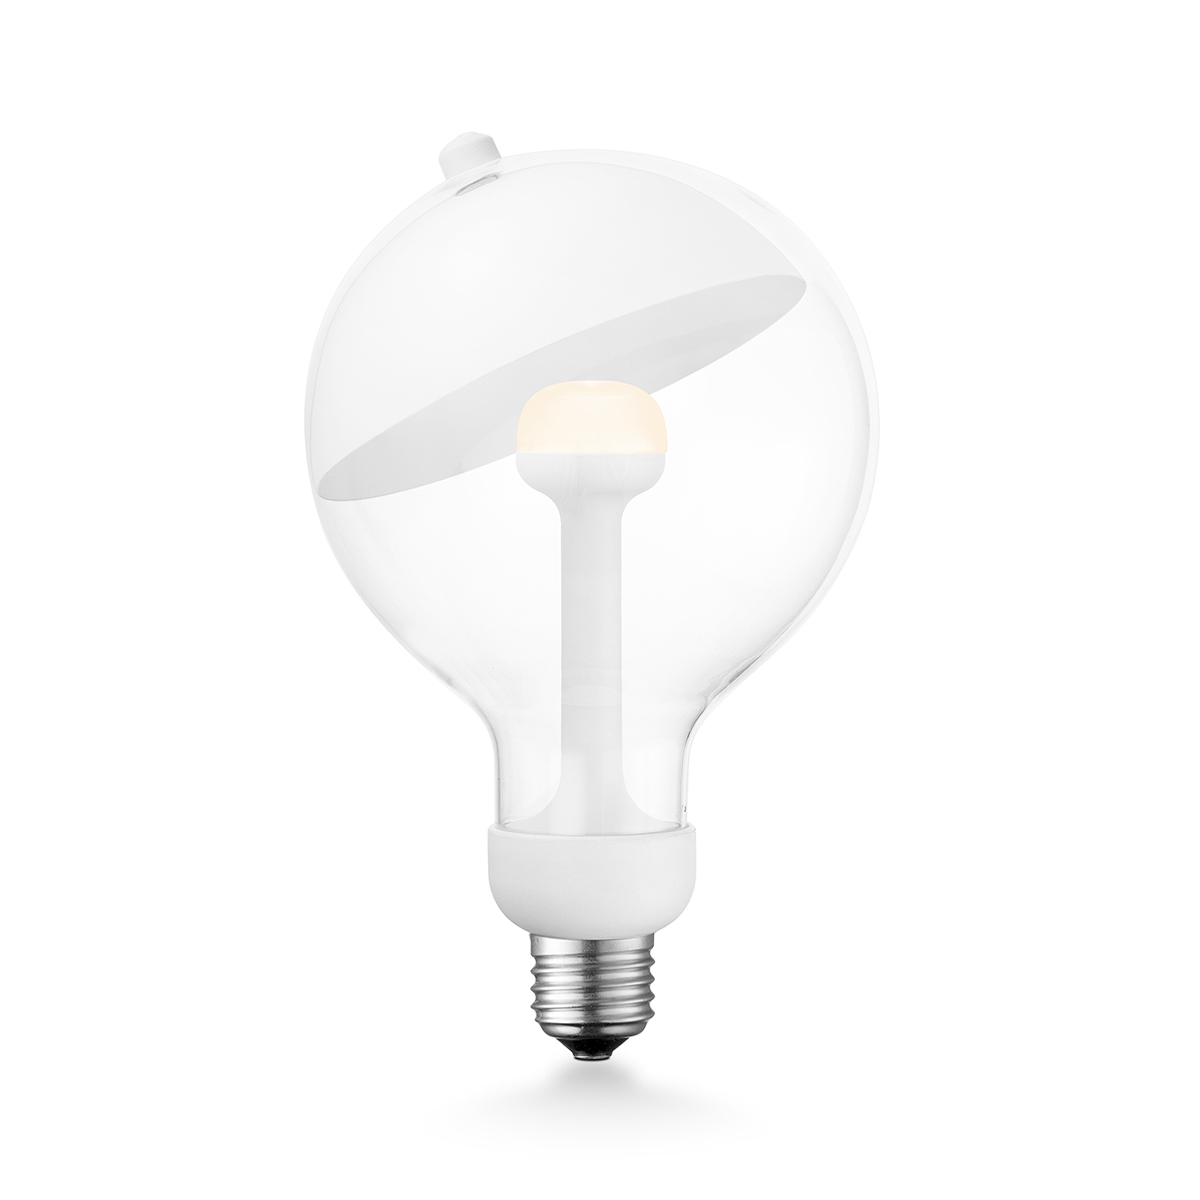 Tangla lighting - 0672-01-D - LED Light Bulb Move me - G120 5.5W Sphere white - dimmable - E27 / E26